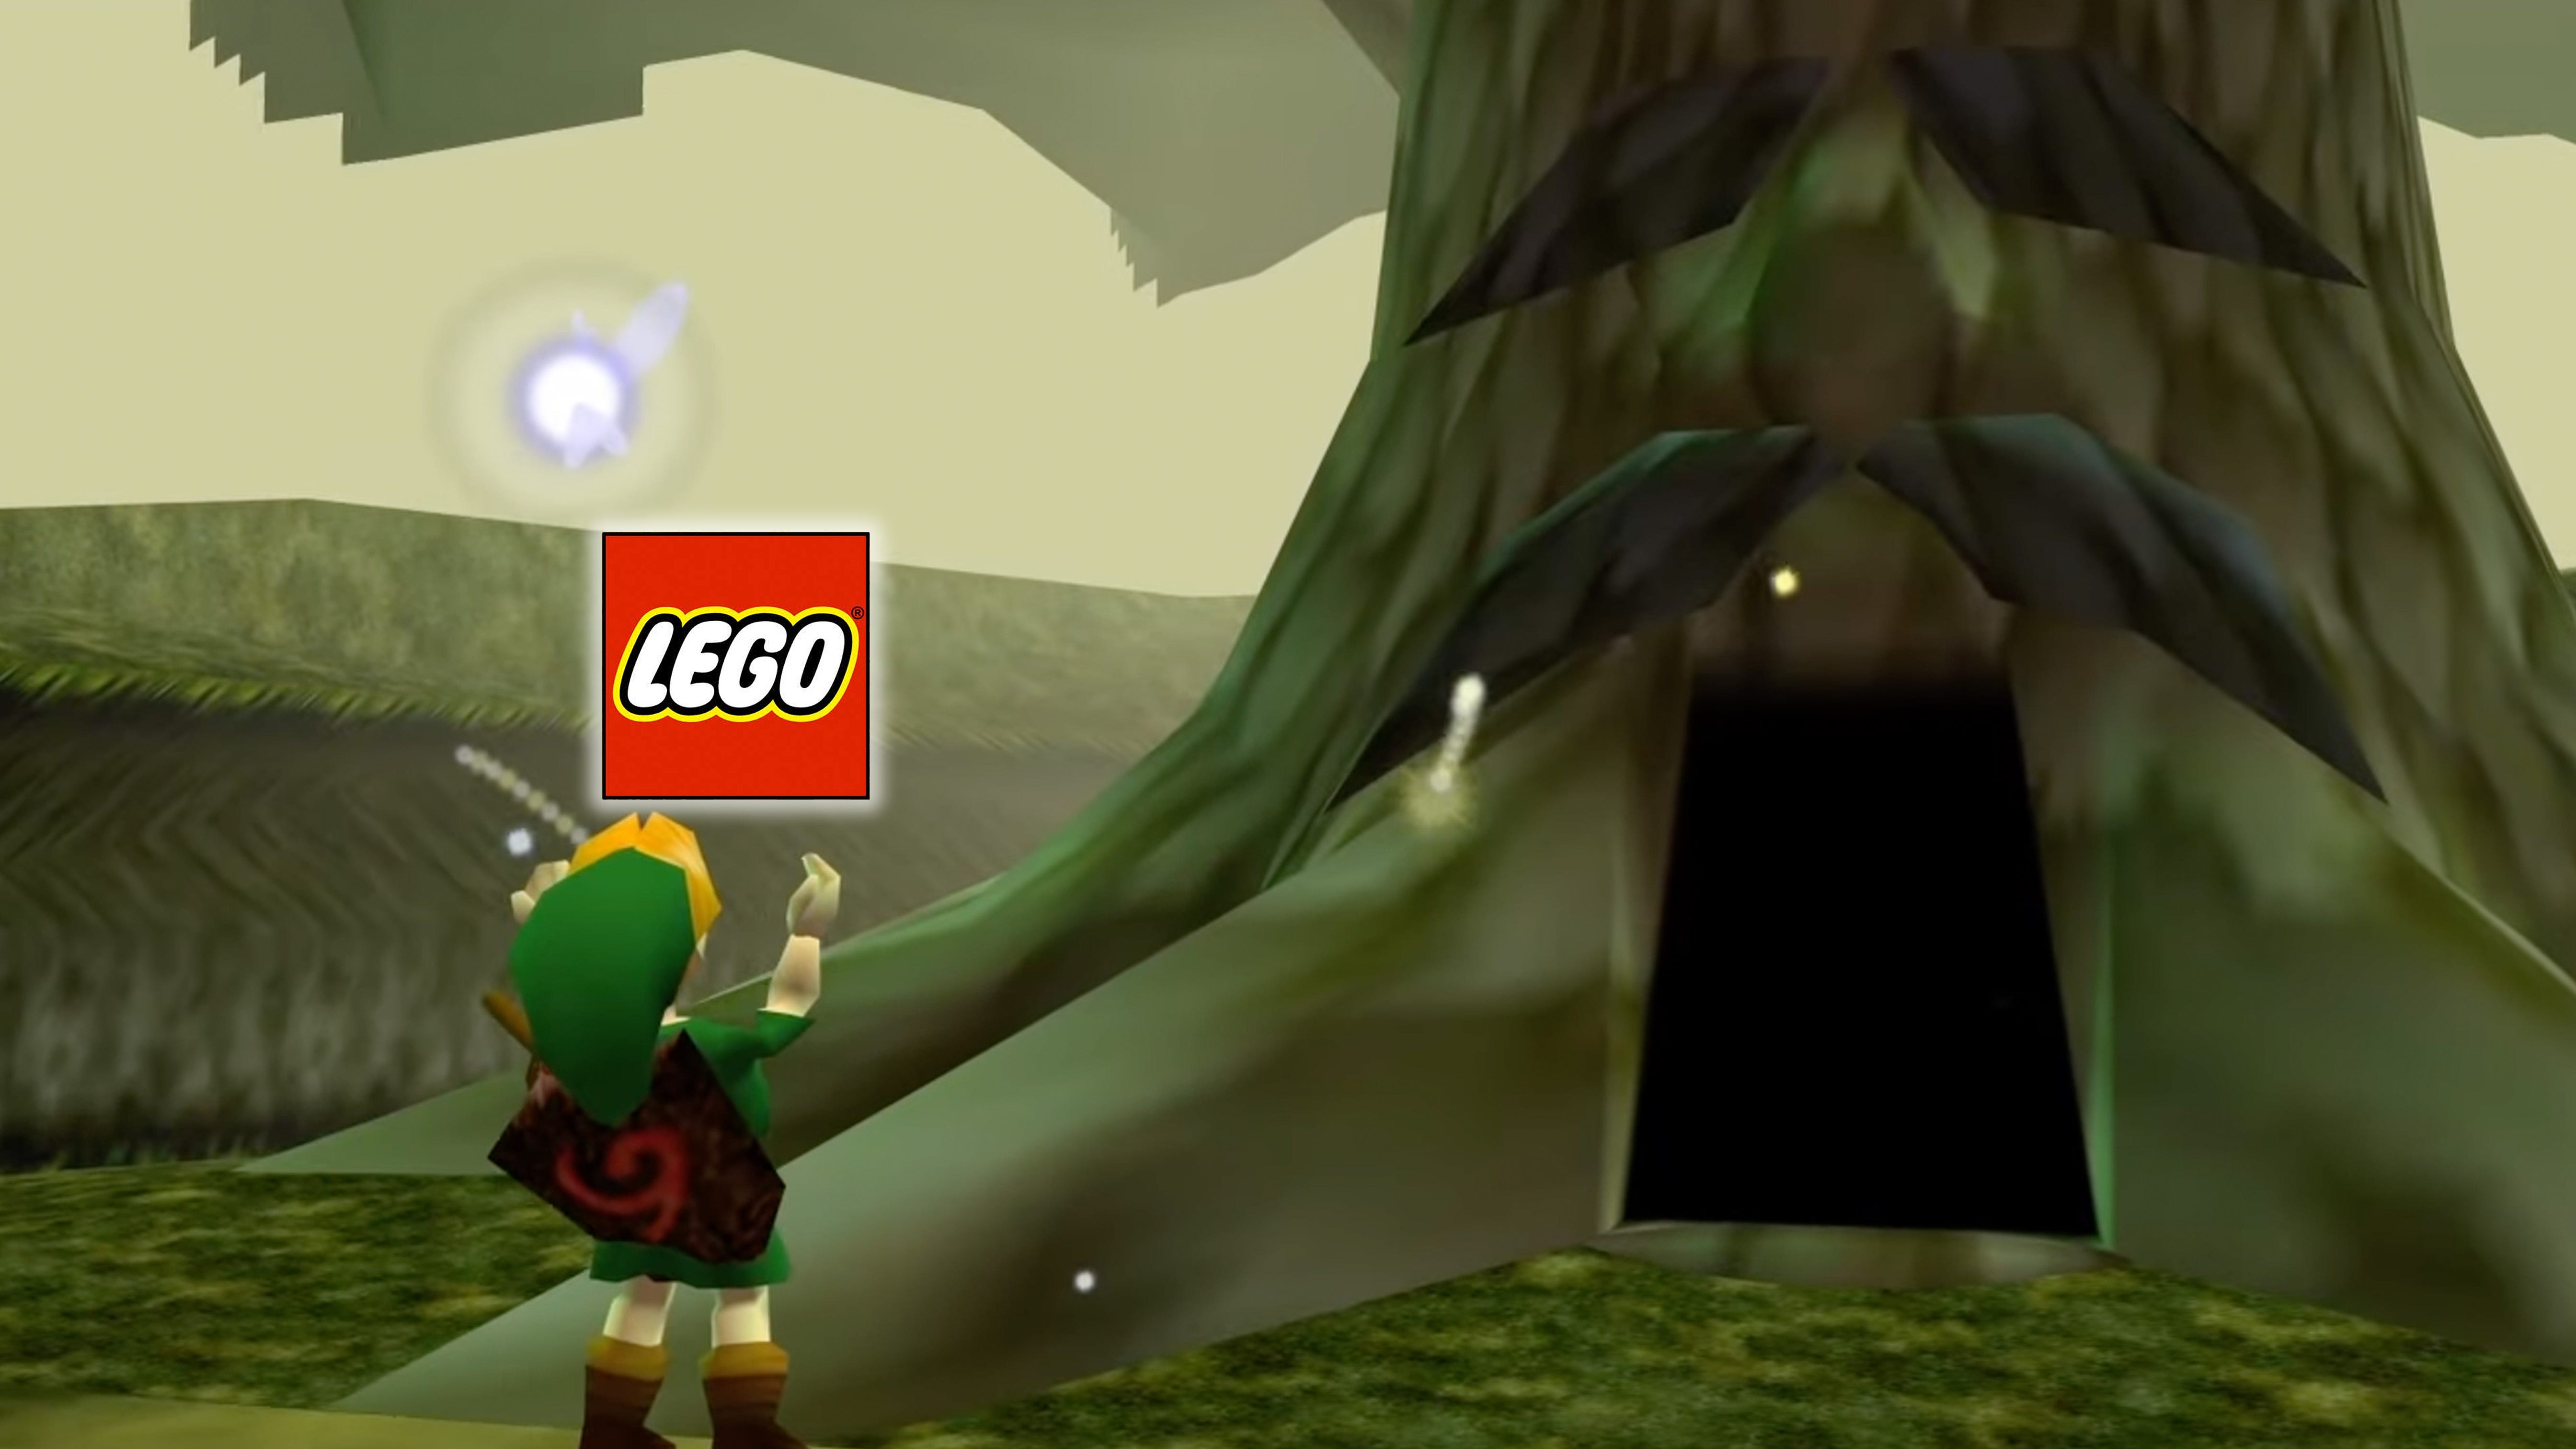 Rumored Zelda LEGO set may recreate The Great Deku Tree, brick by brick